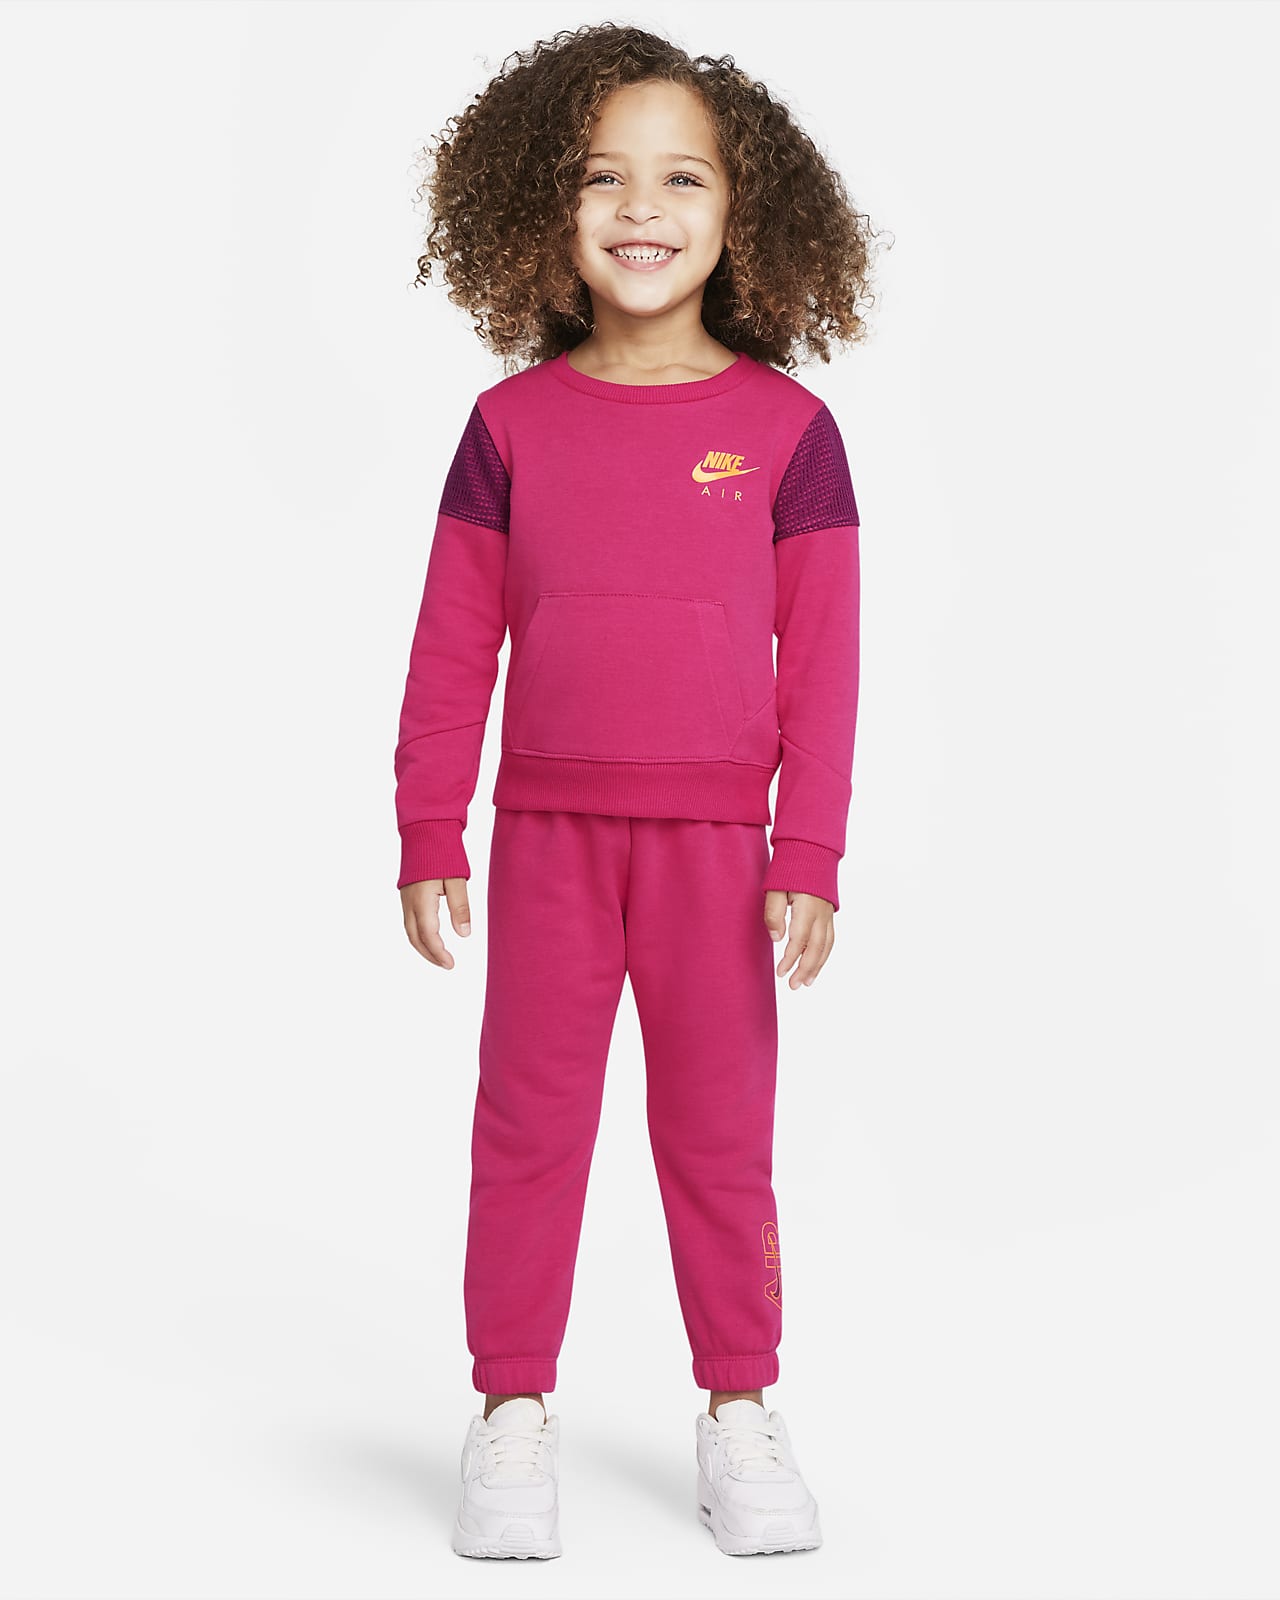 Nike Conjunt de dessuadora i pantalons - Infant